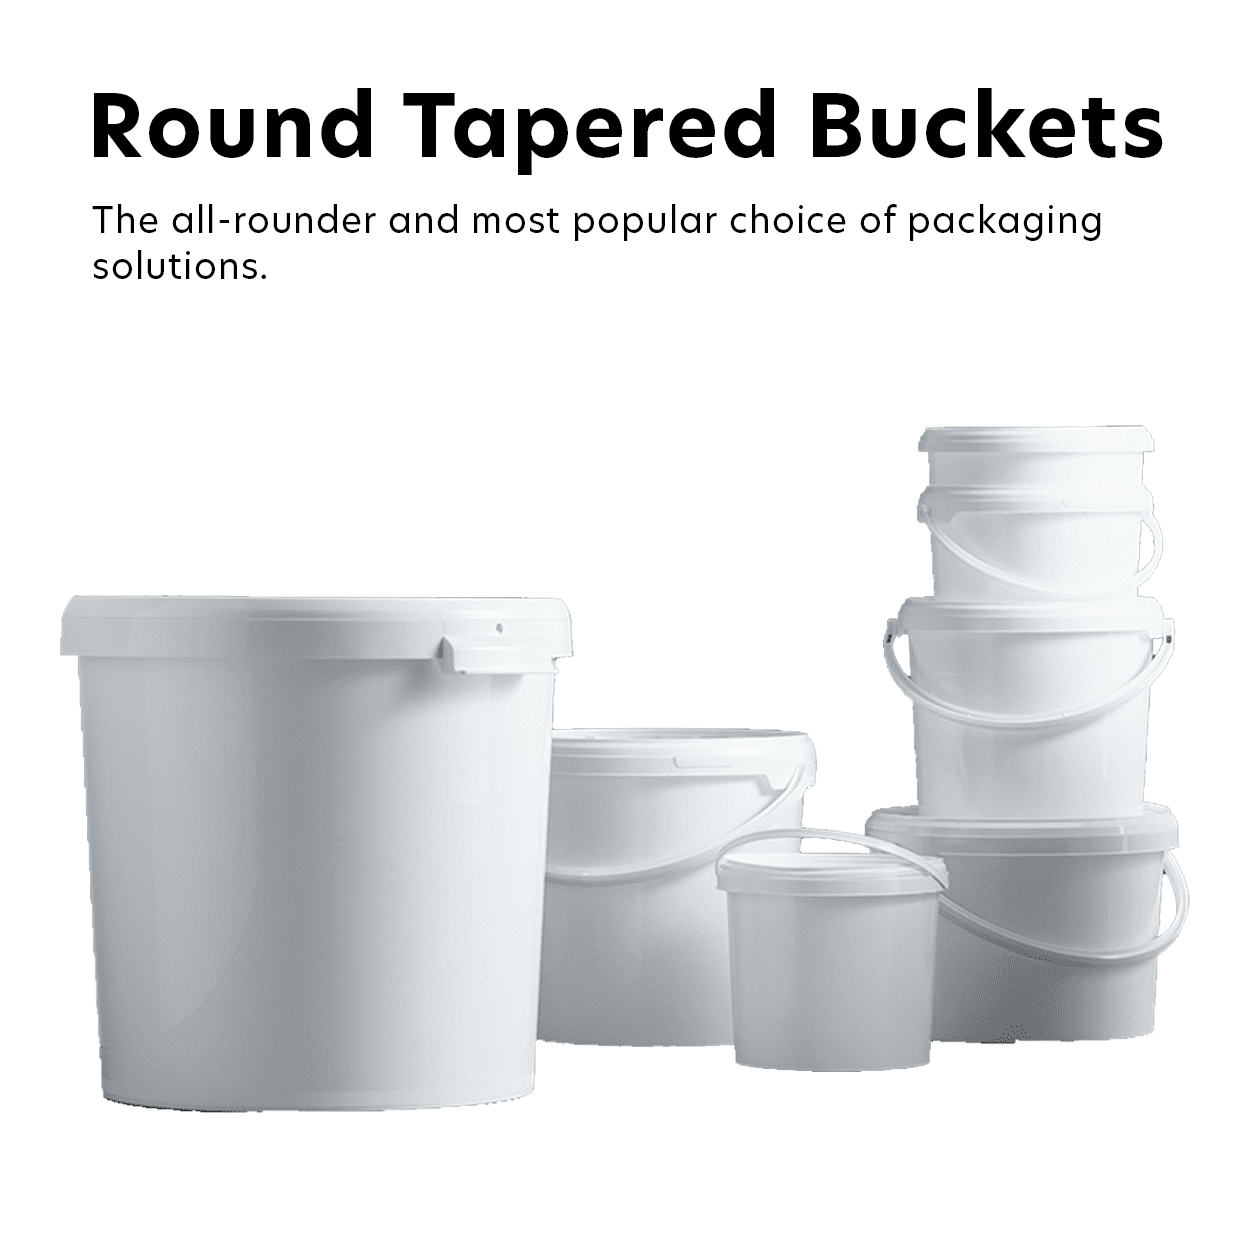 Round Tapered Buckets